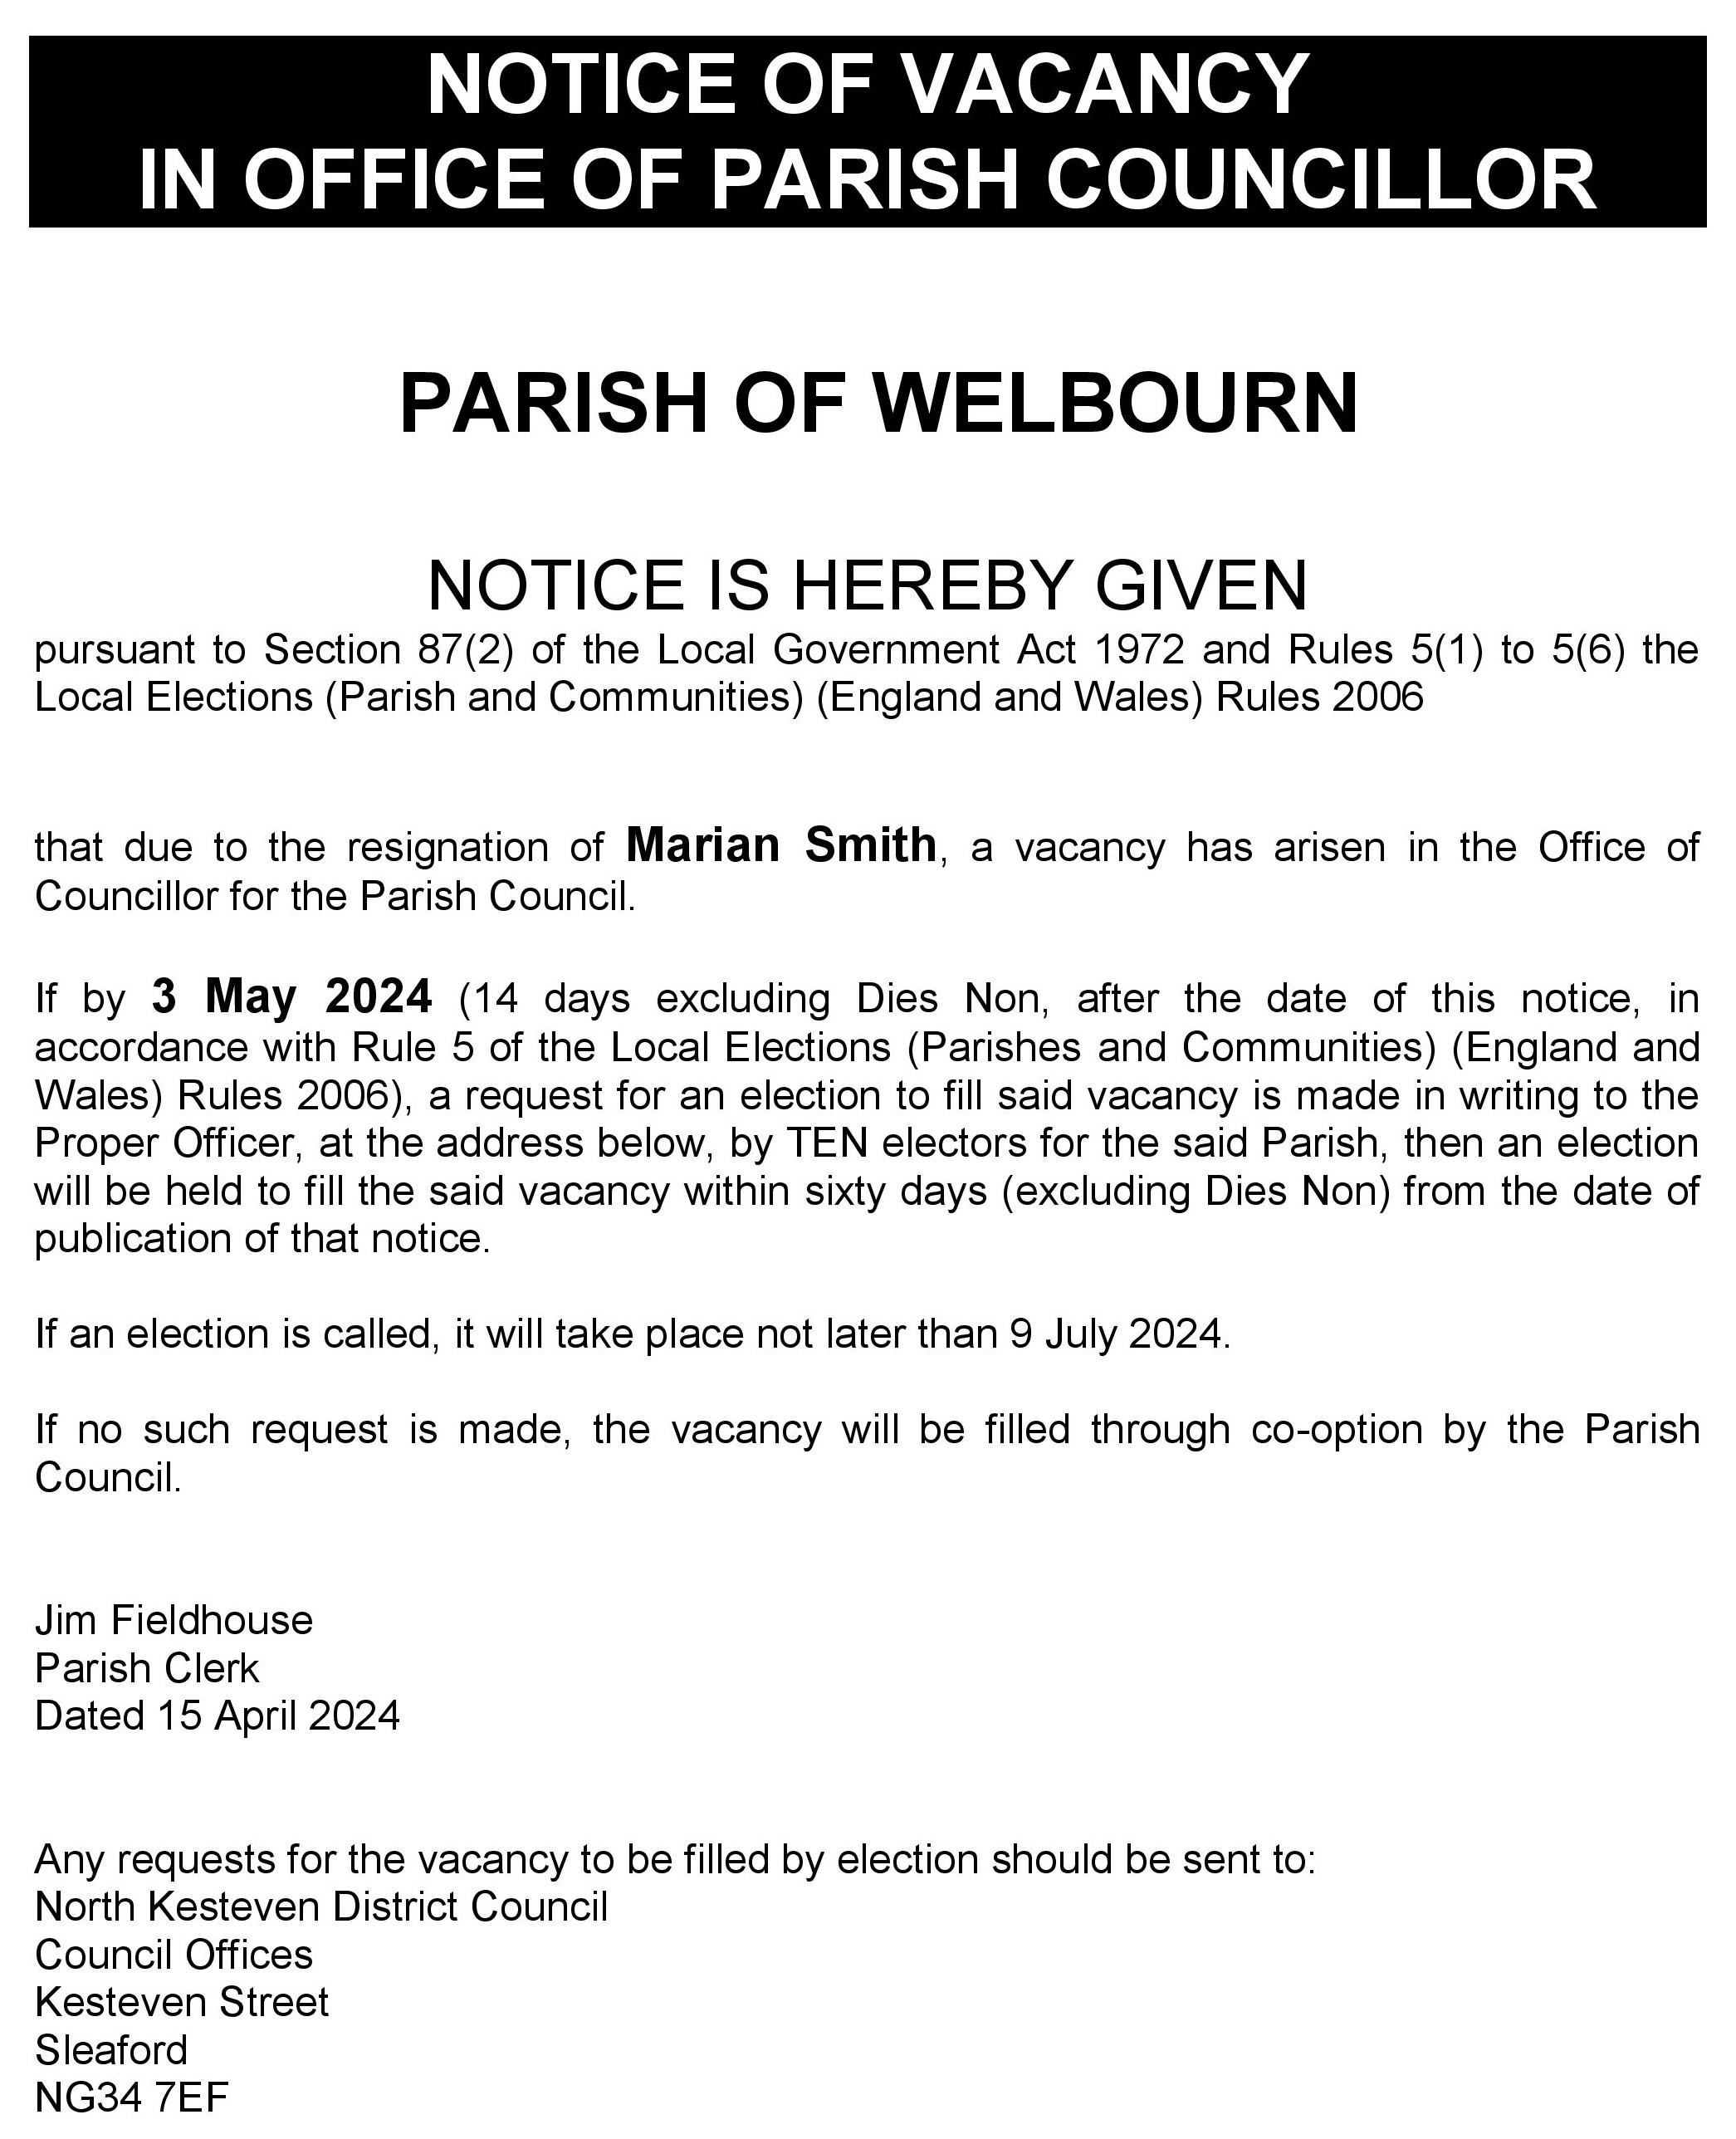 Notice of vacancy welbourn m smith